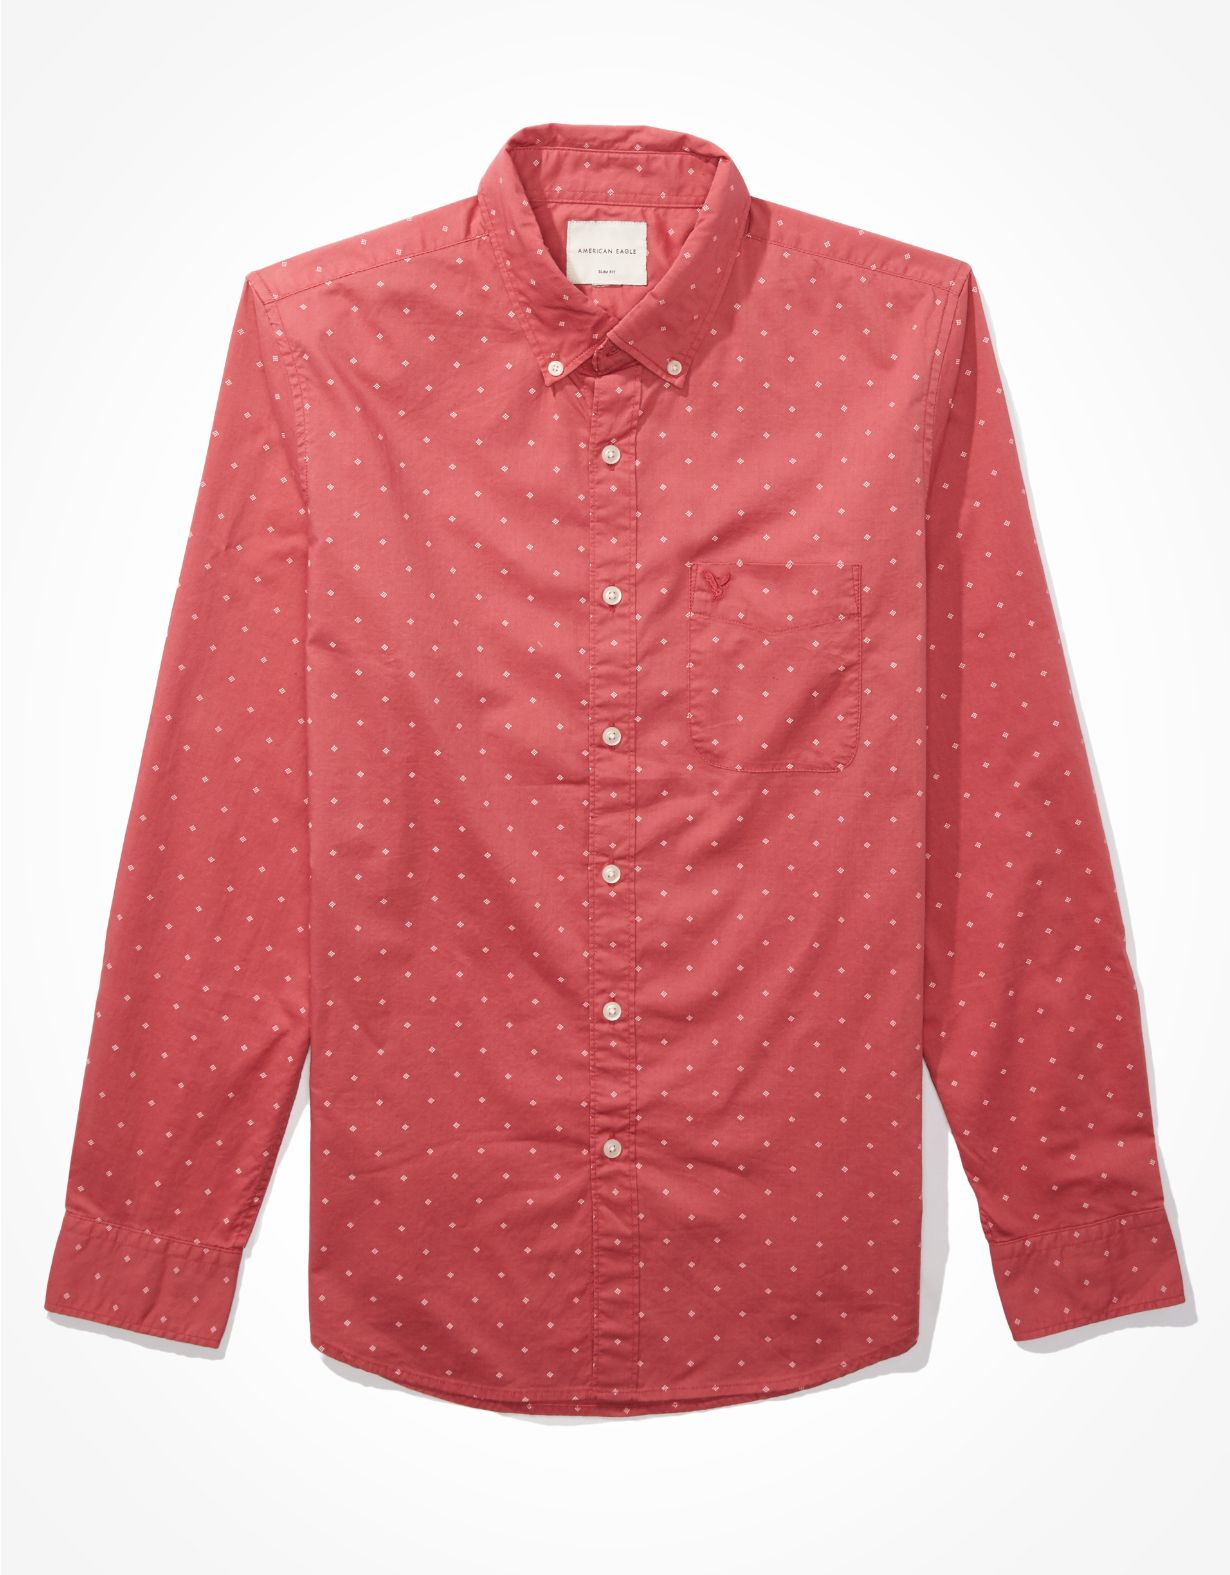 AE Poplin Button-Up Shirt